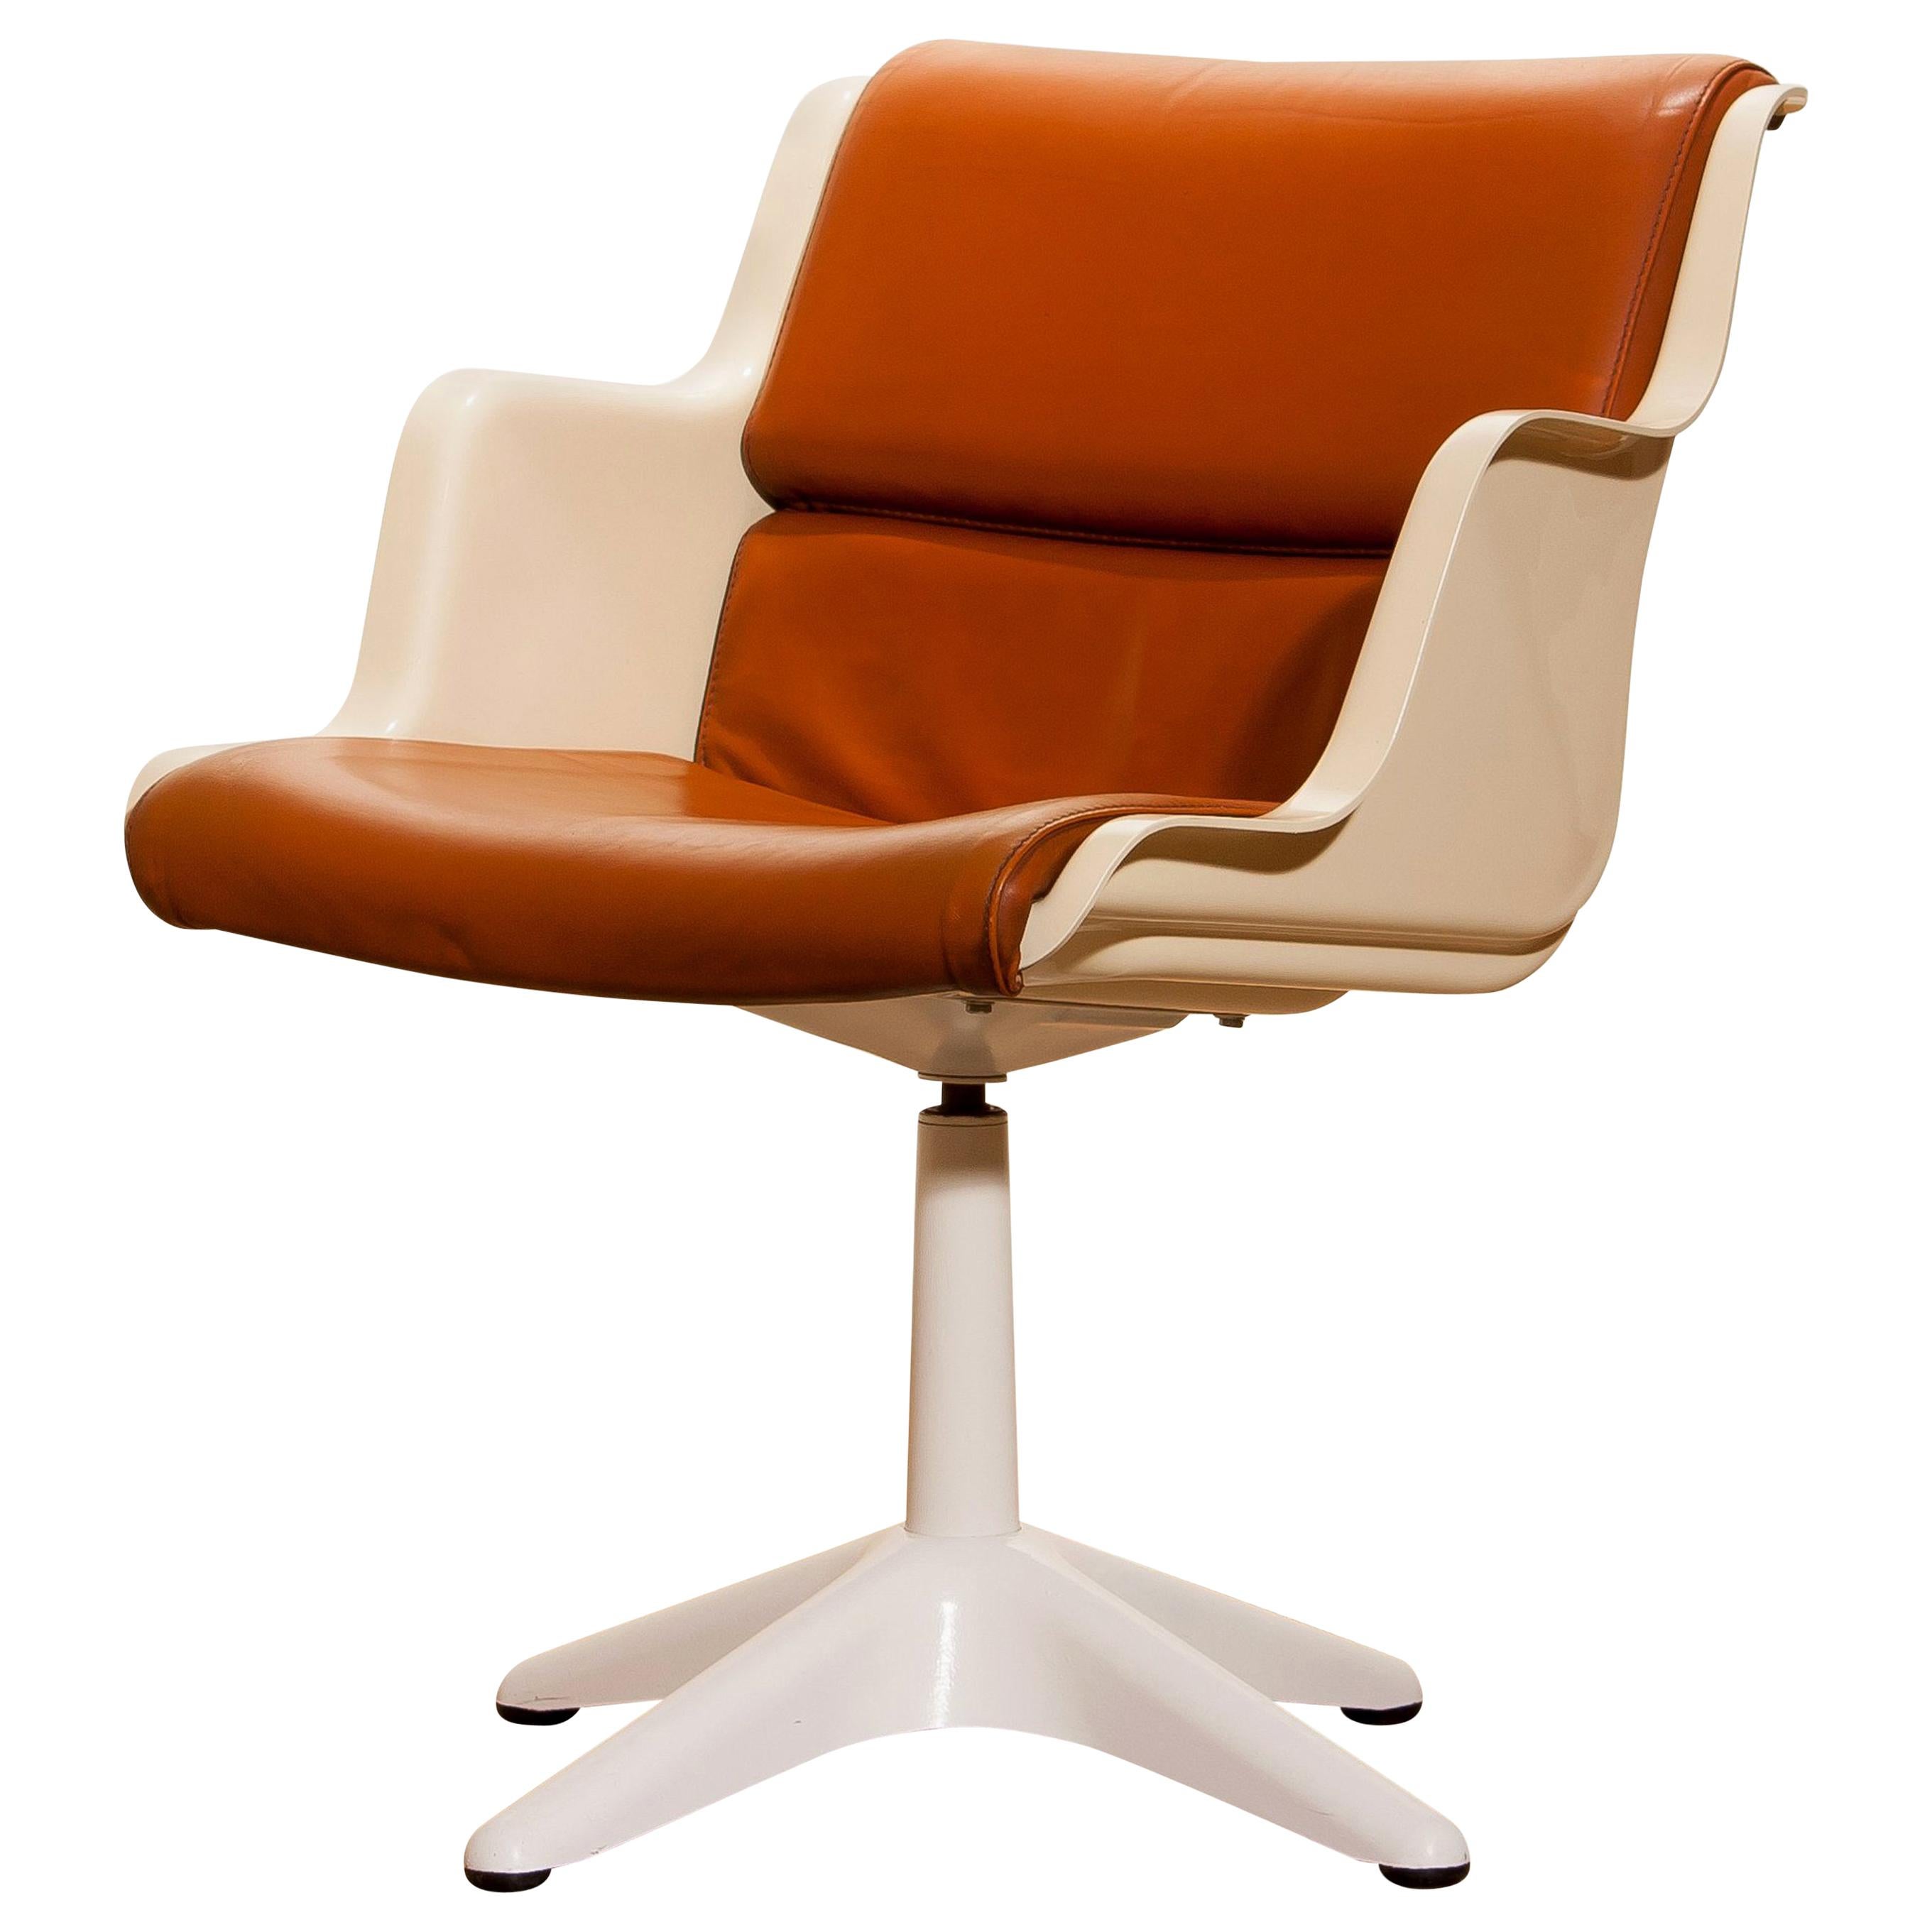 1970s, White Leather / Fibreglass Desk Side Chair by Yrjö Kukkapuro for Haimi